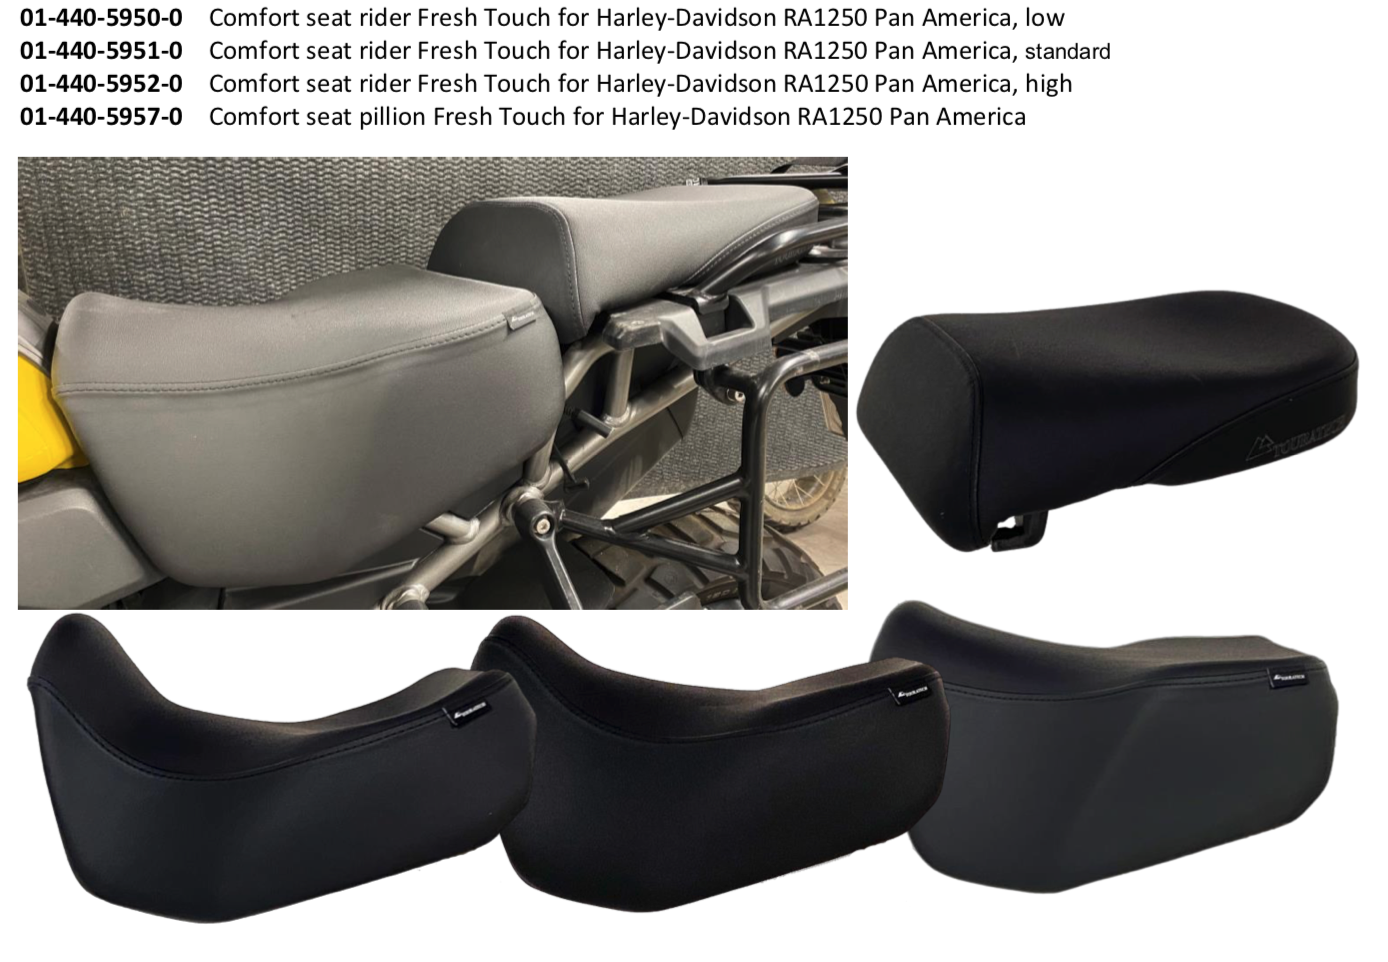 Comfort seat rider Fresh Touch Harley-Davidson RA1250 Pan America, standard